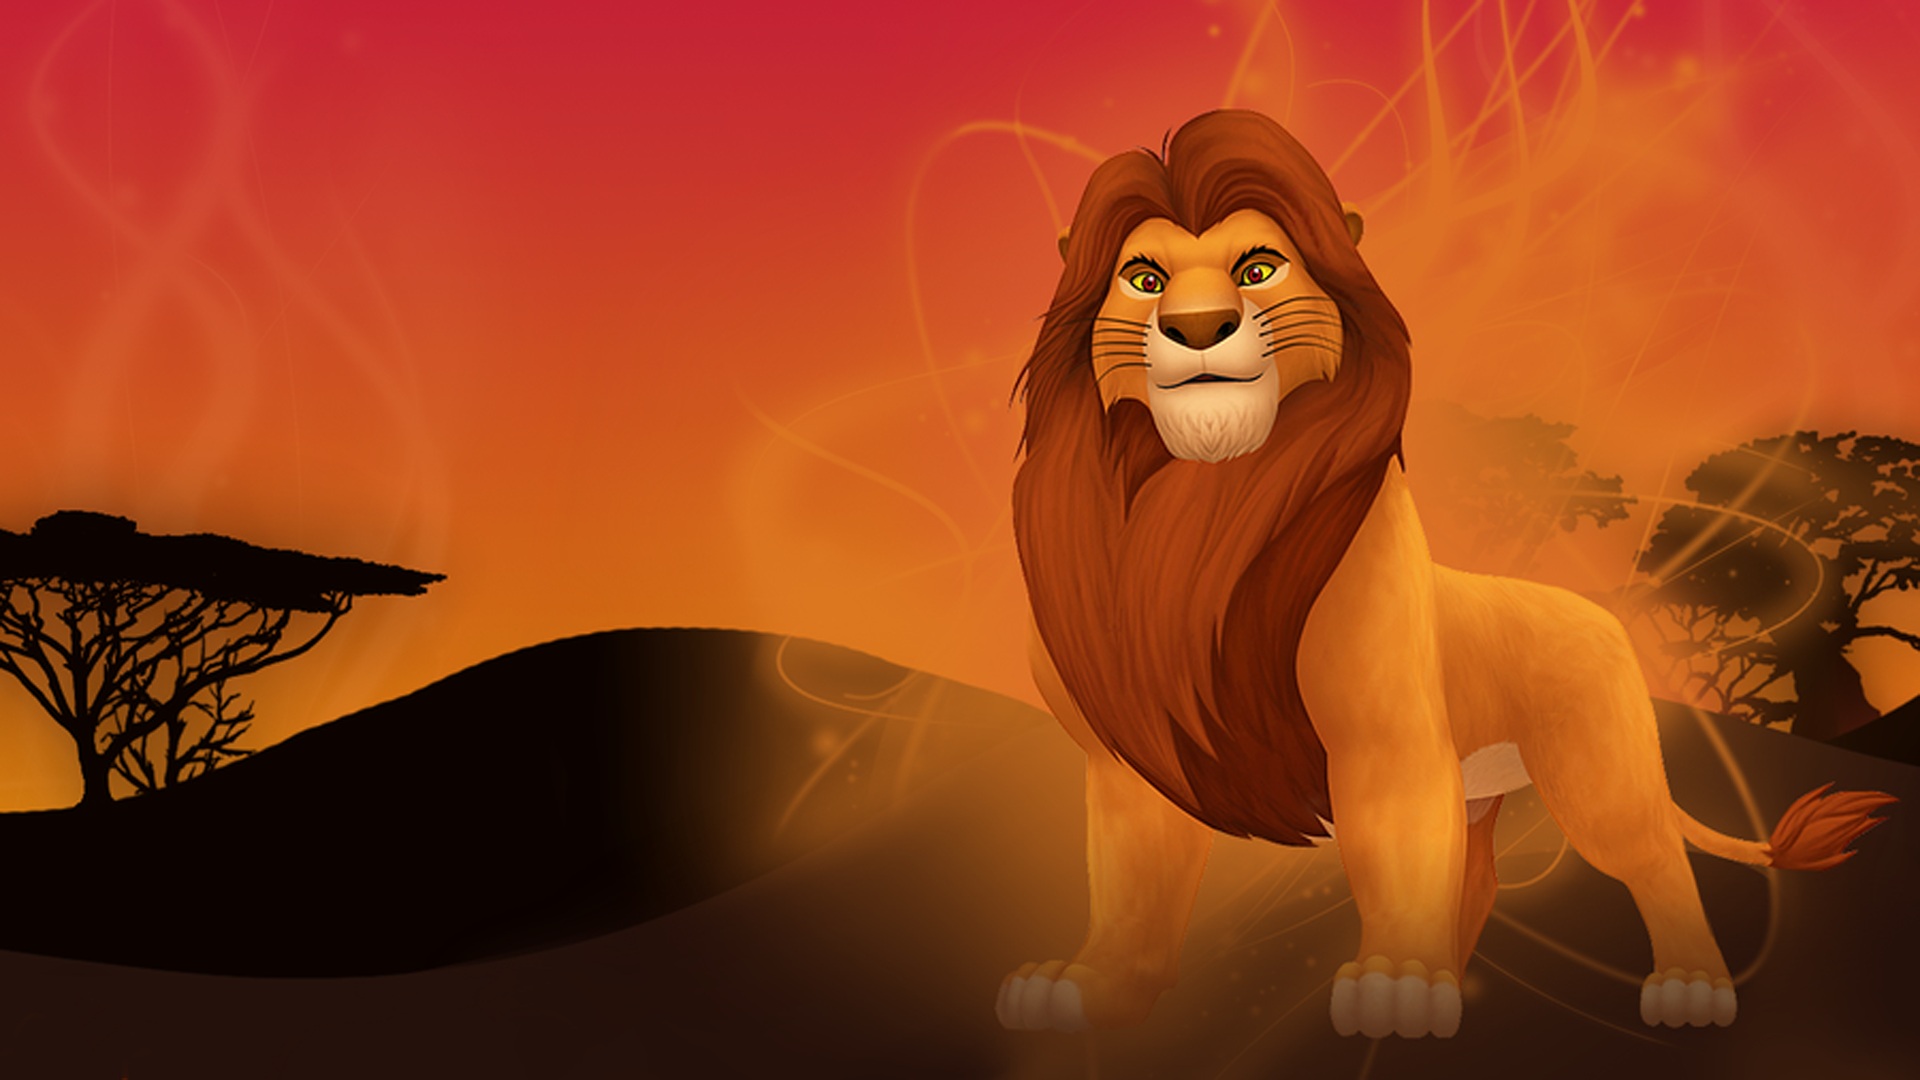 The Lion King Mufasa Walt Disney Wallpaper Hd 1920x1080 : 